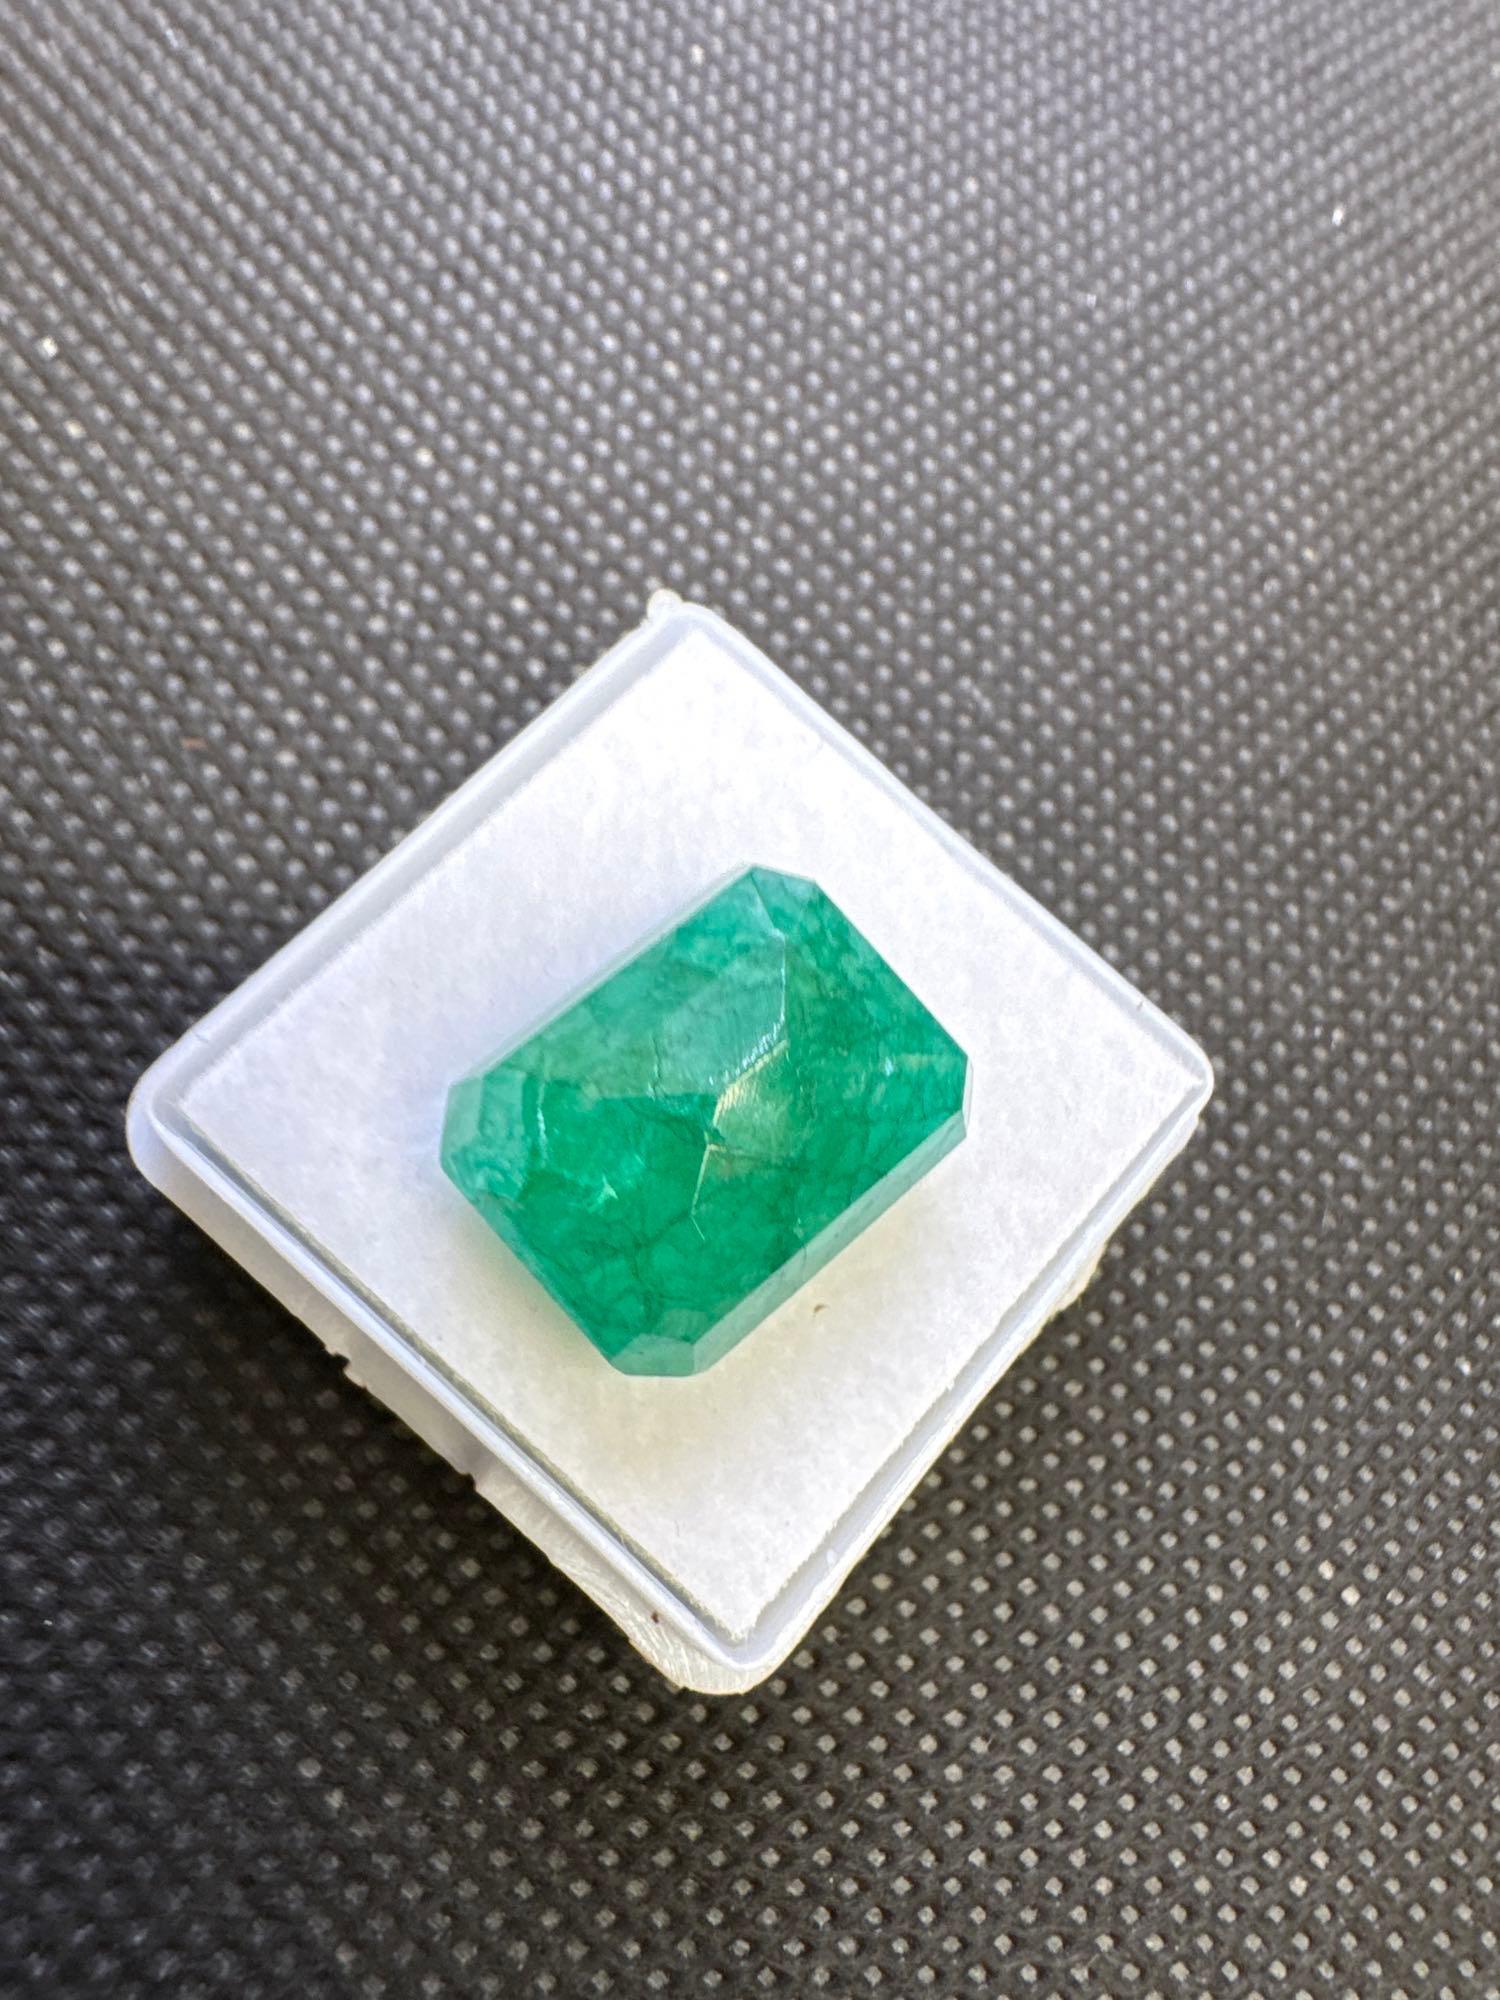 Emerald Cut Green Emerald Gemstone Stunning Green 13.55Ct